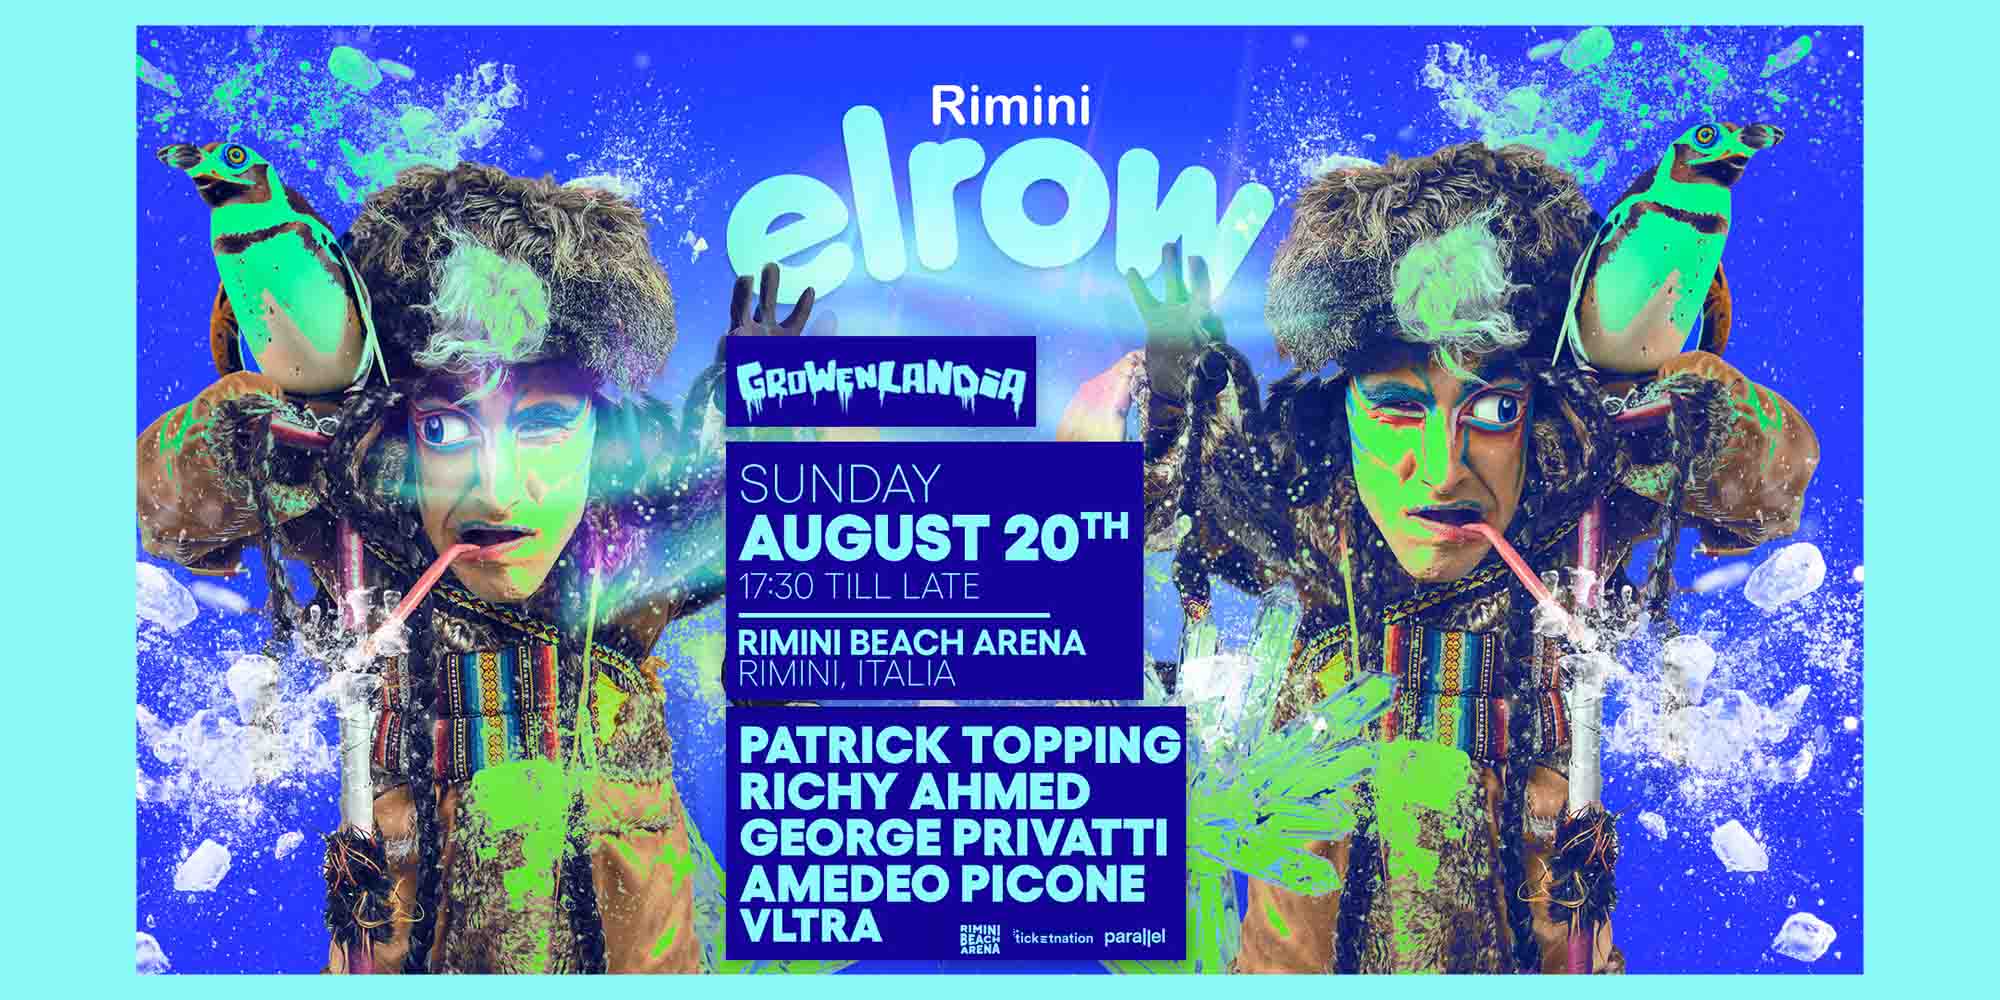 el-row-rimini-beach-arena-20-08-23